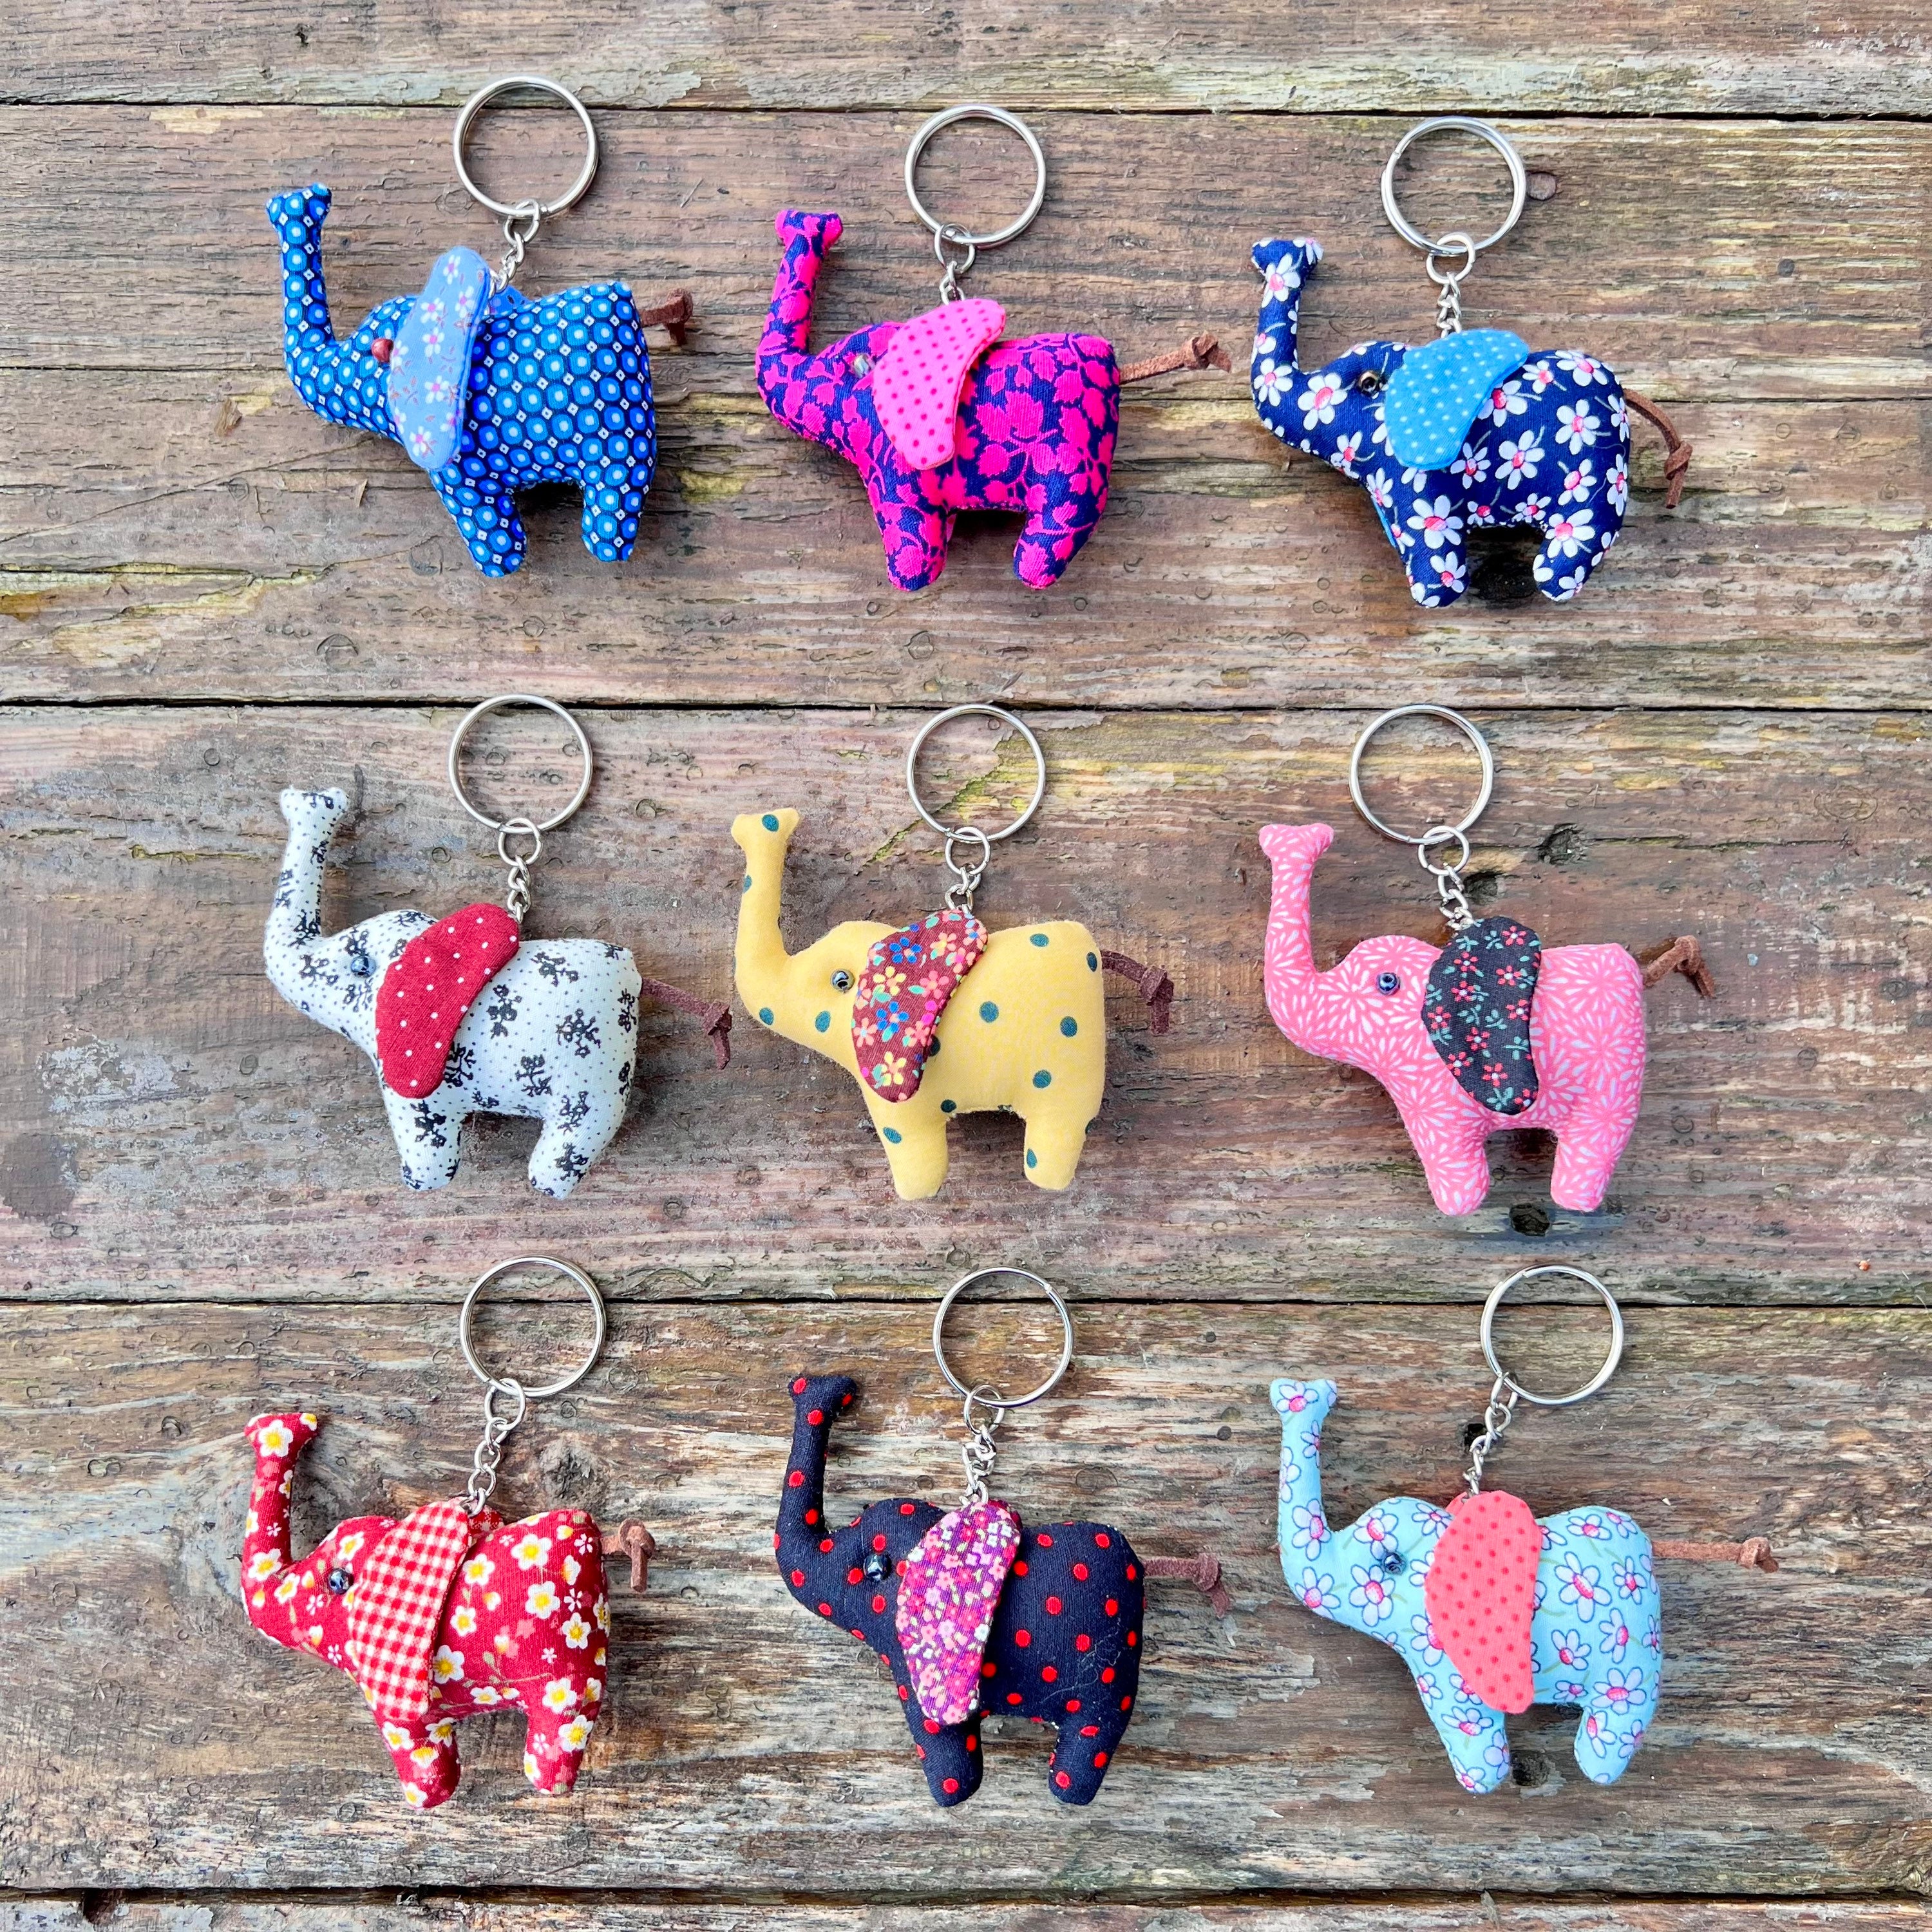 Porte-clés Mini éléphant 